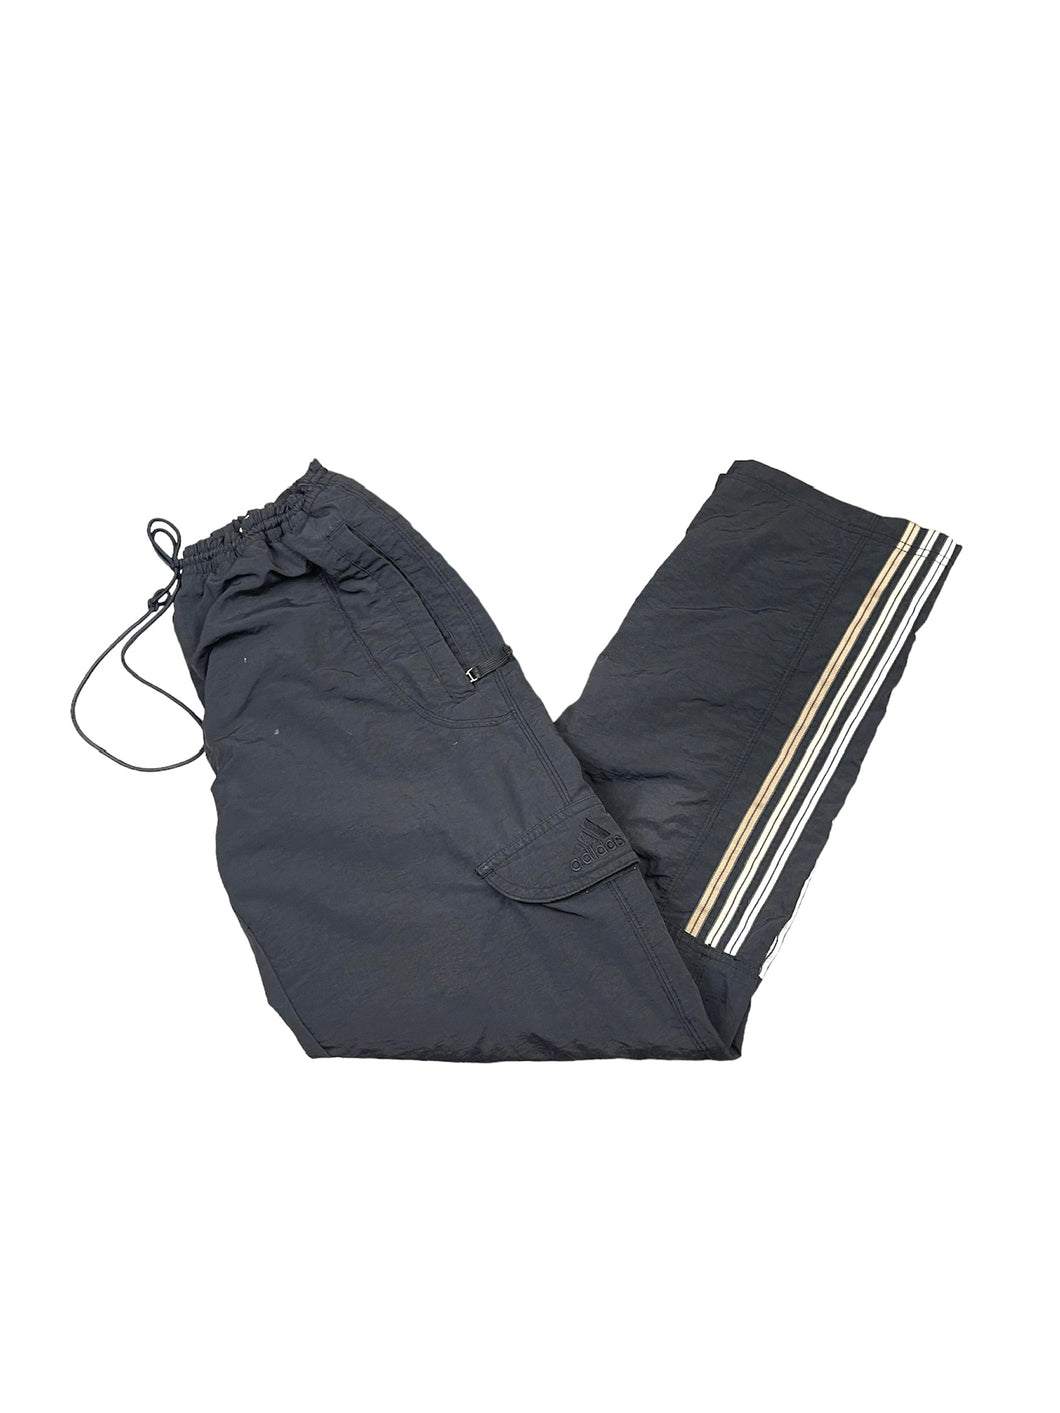 Adidas Parachute Cargo Track Pant - Small